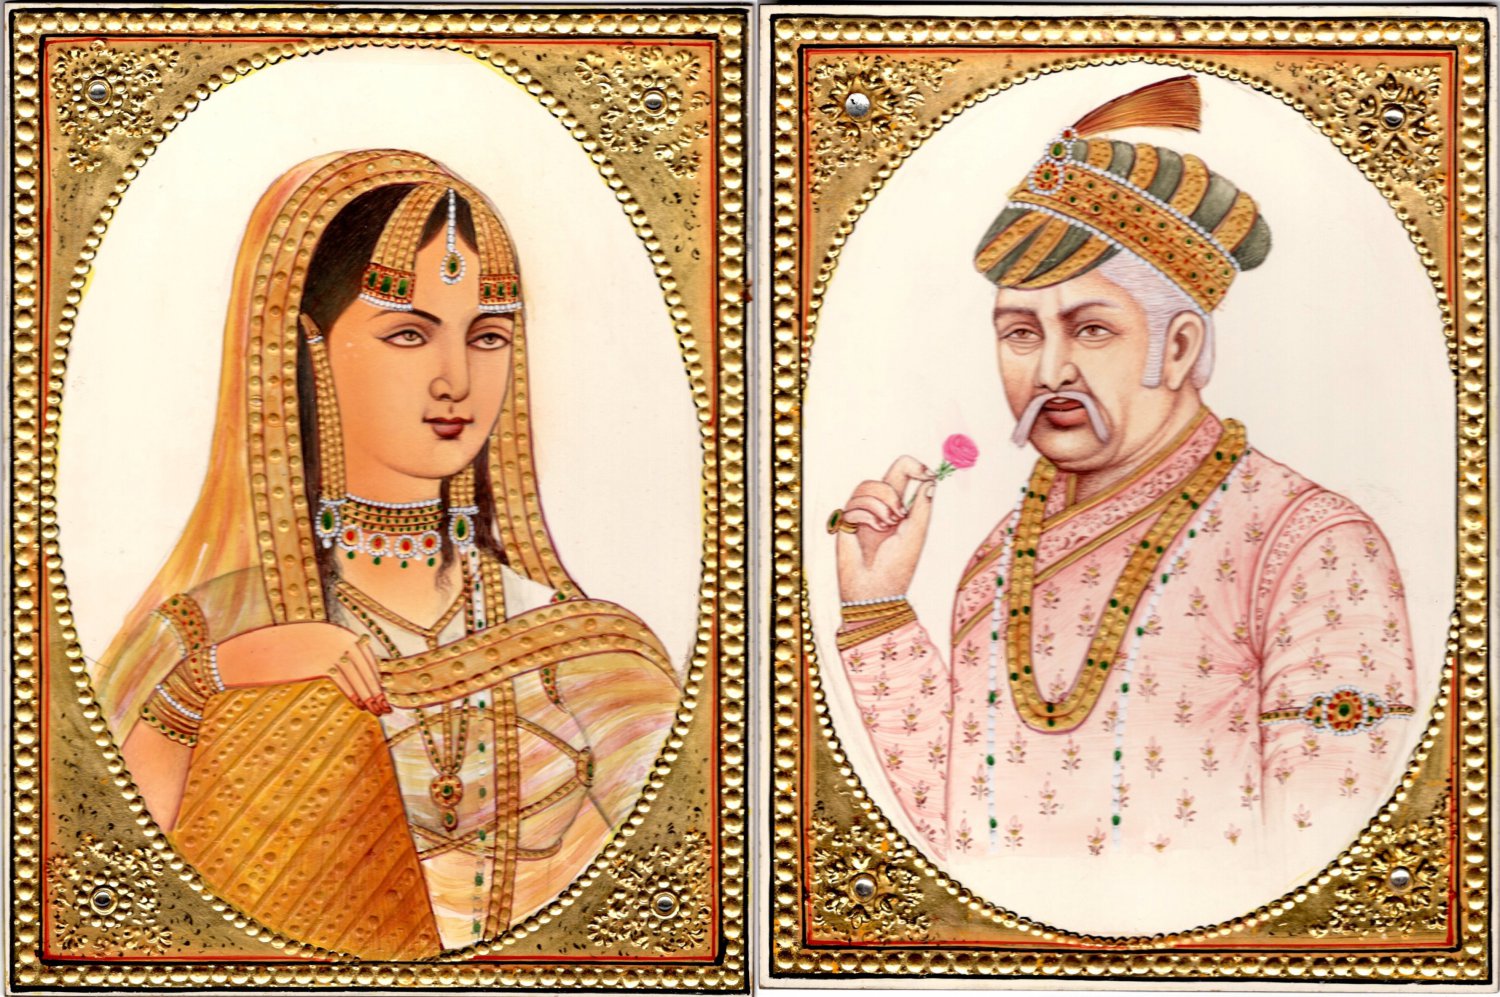 Third Mughal Emperor